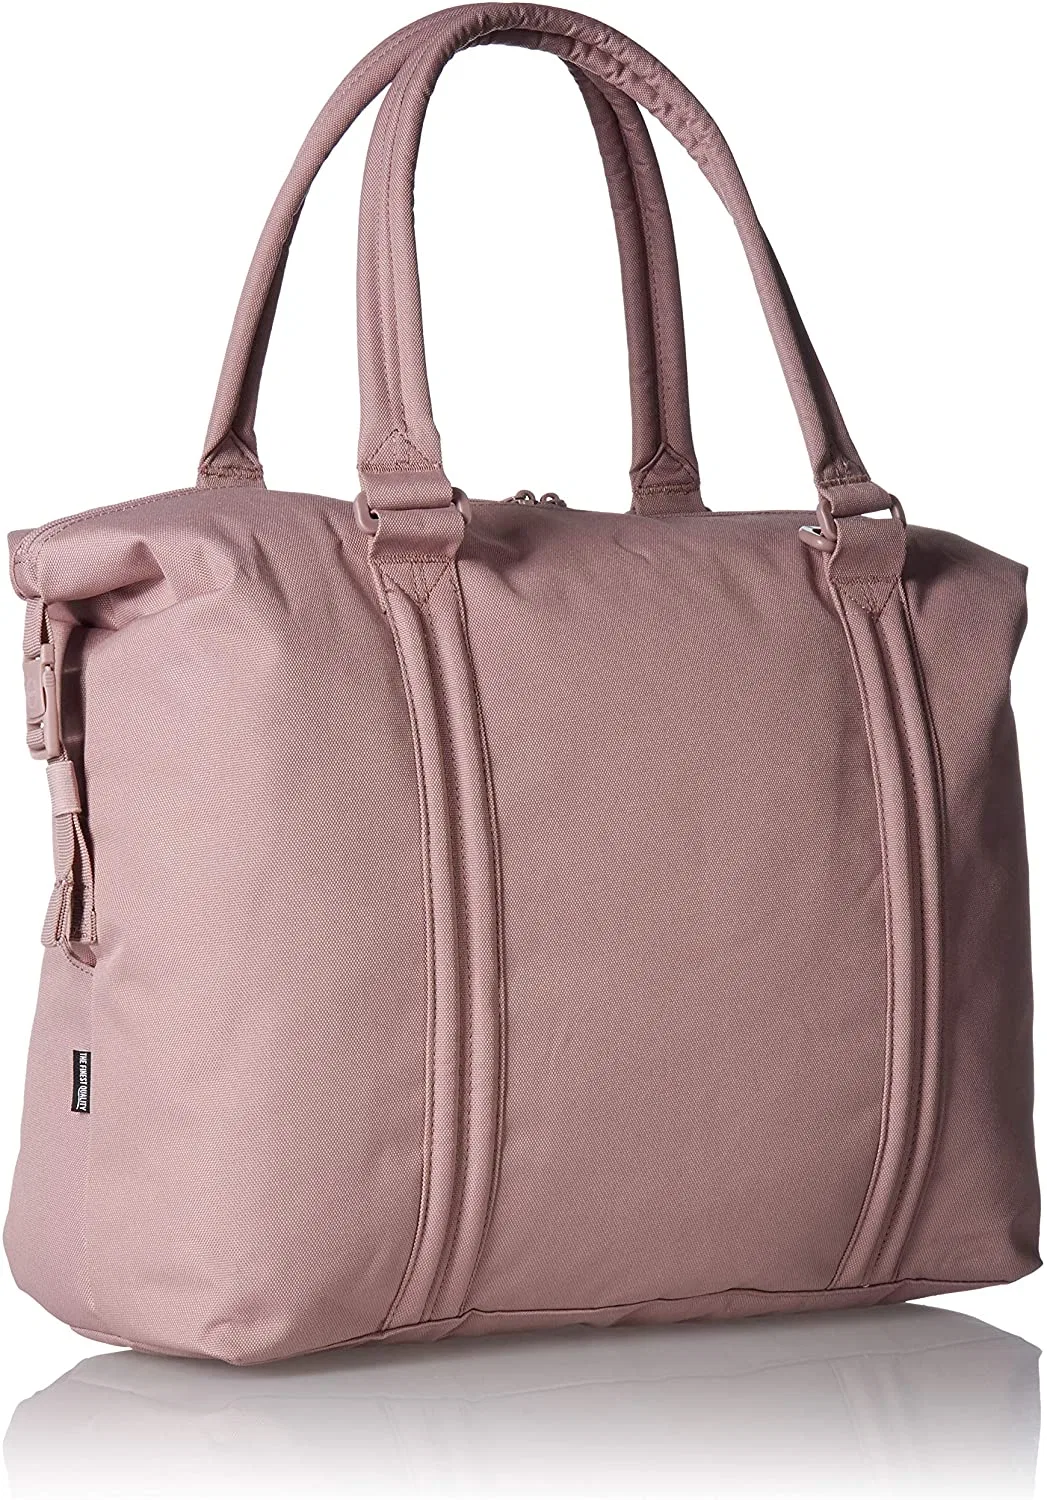 Custom Waterproof Shoulder Bag Tote Changing Baby Mommy Bag for Travel or Hospital